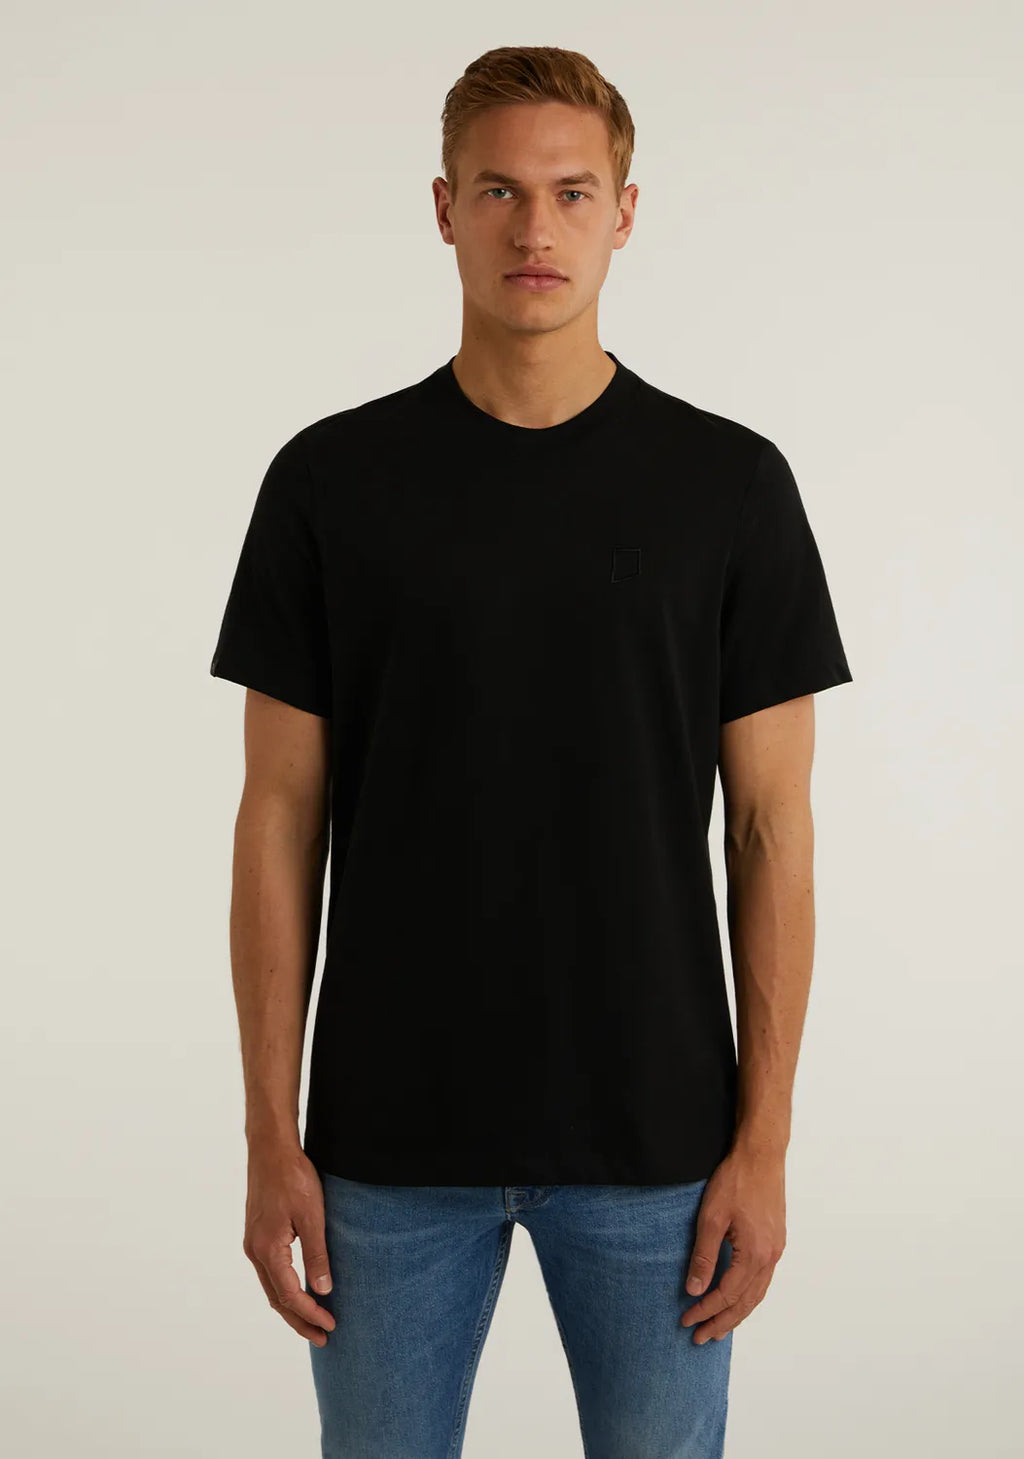 Halle – T-Shirts Yeans Shop Online